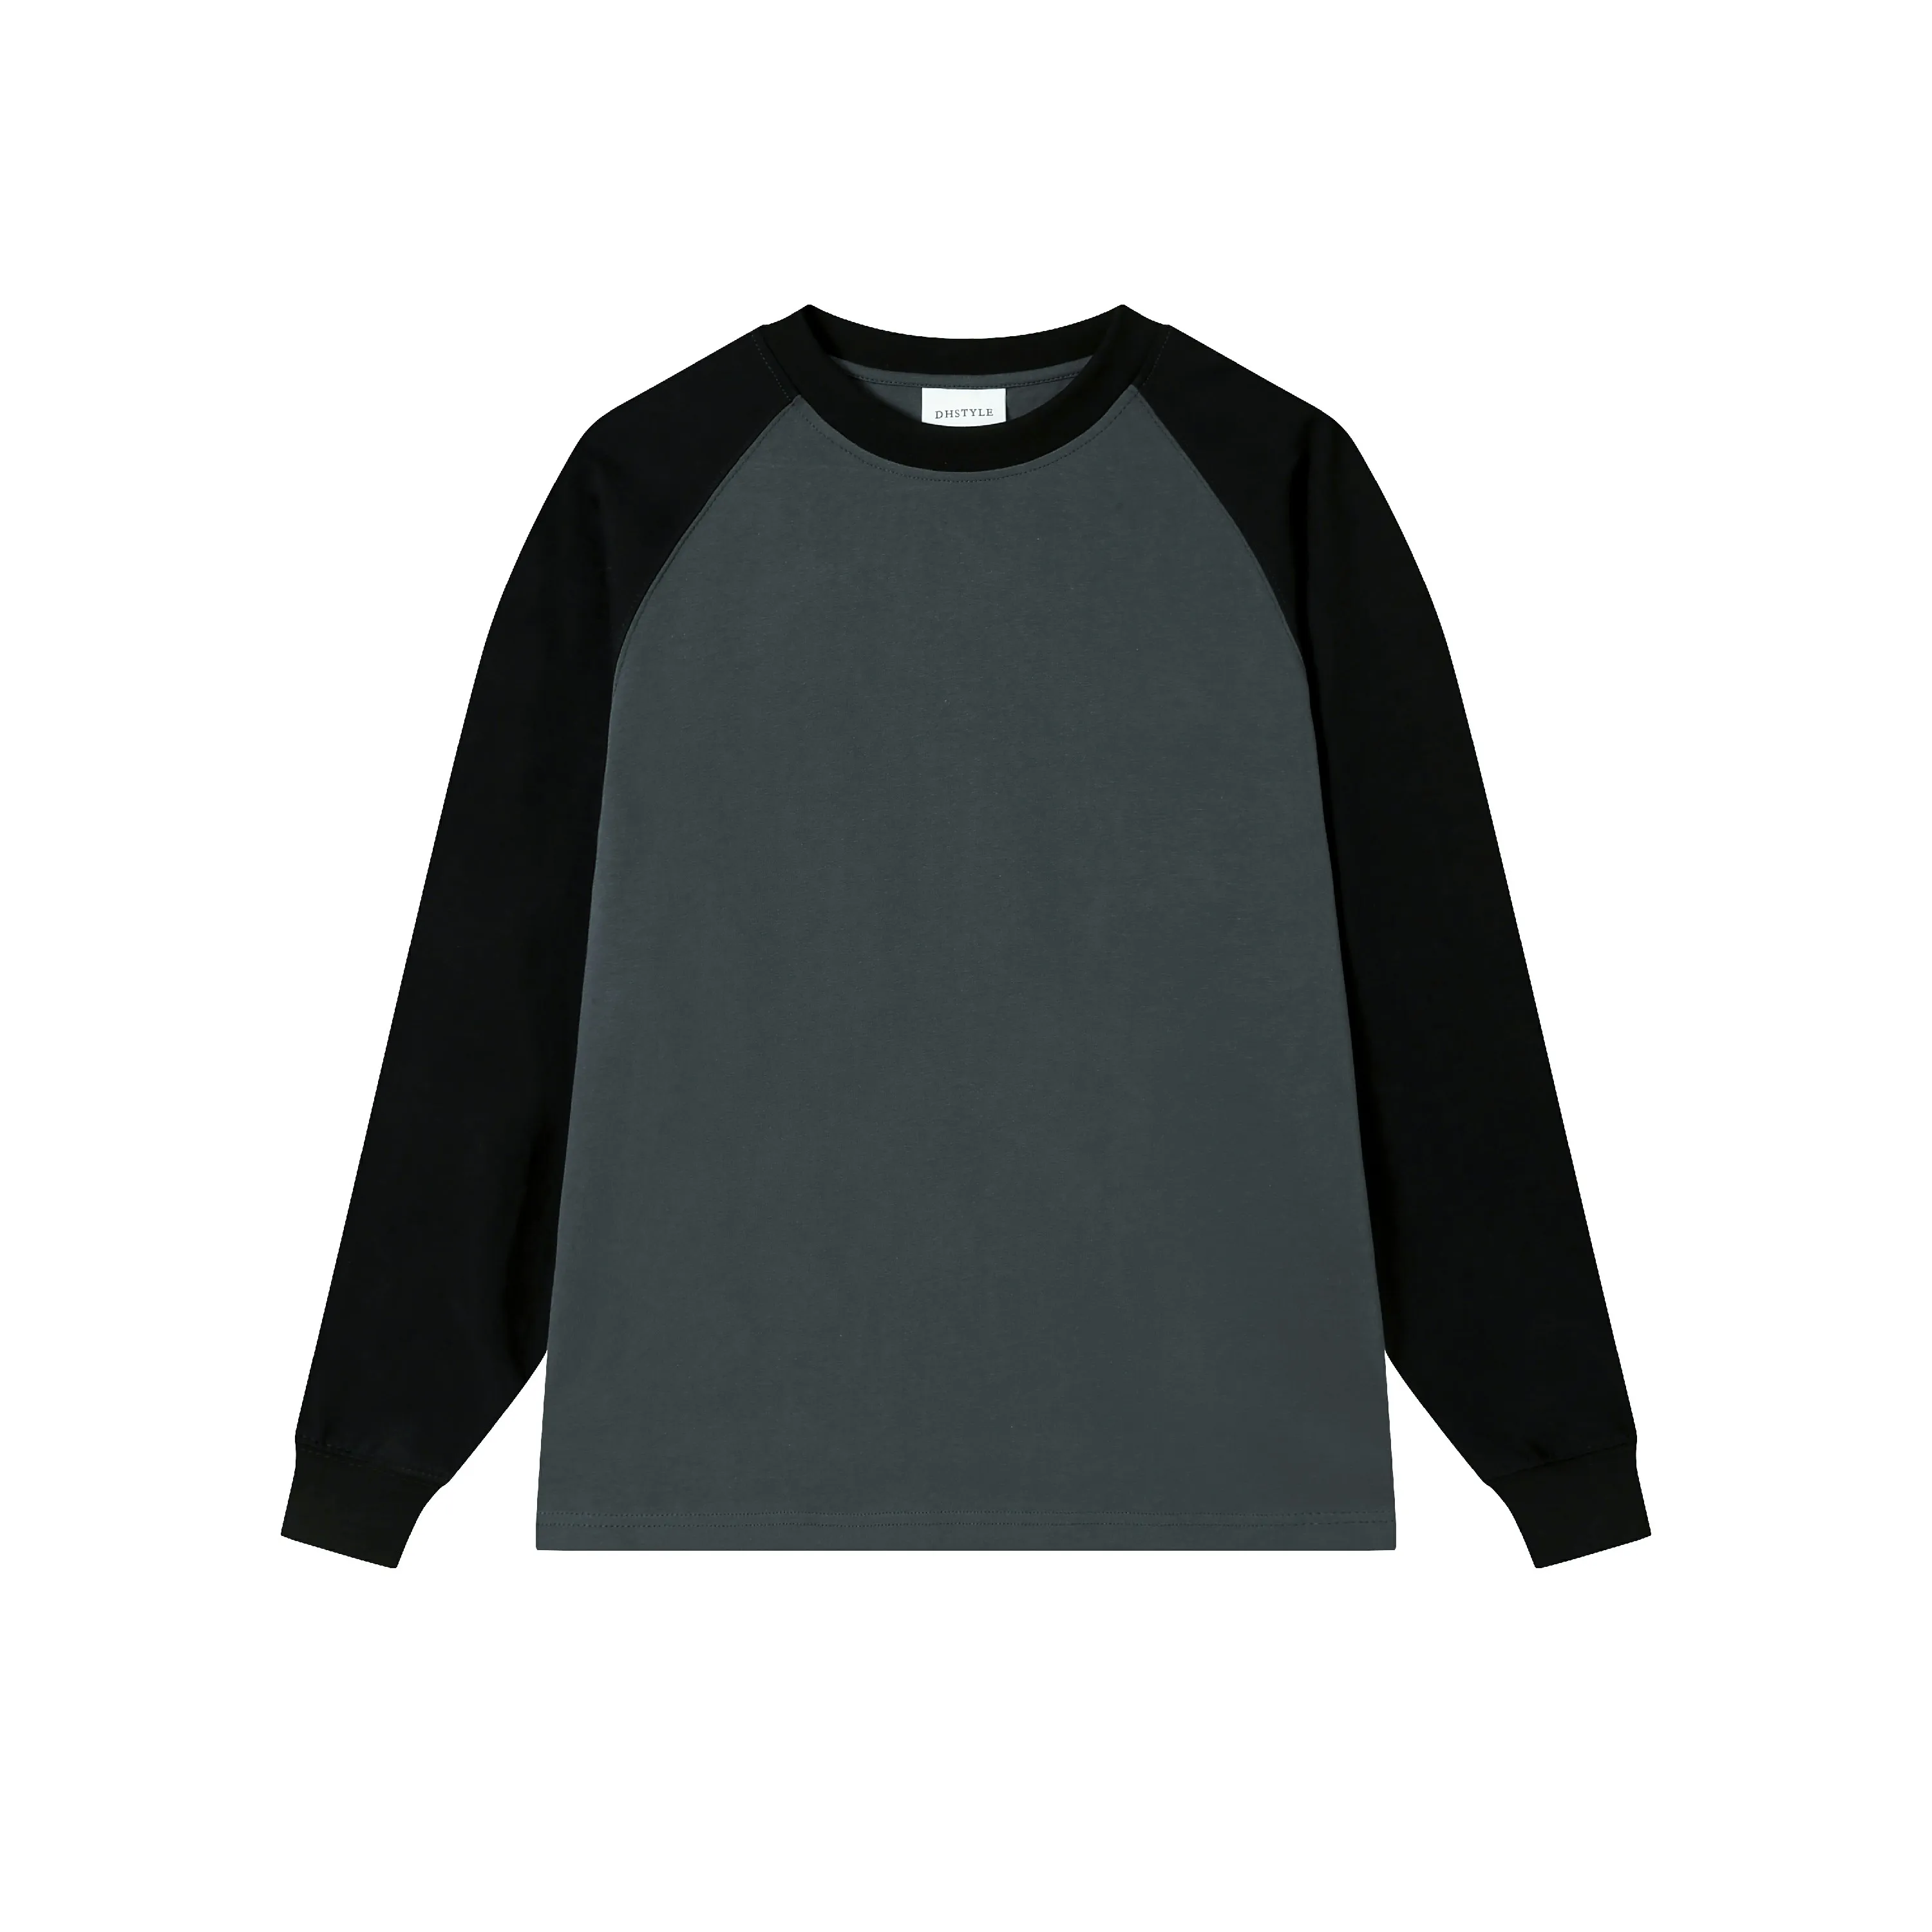 t-shirts oversize new 260g long-sleeved woman autumn casual 100% cotton heavyweight t-shirt